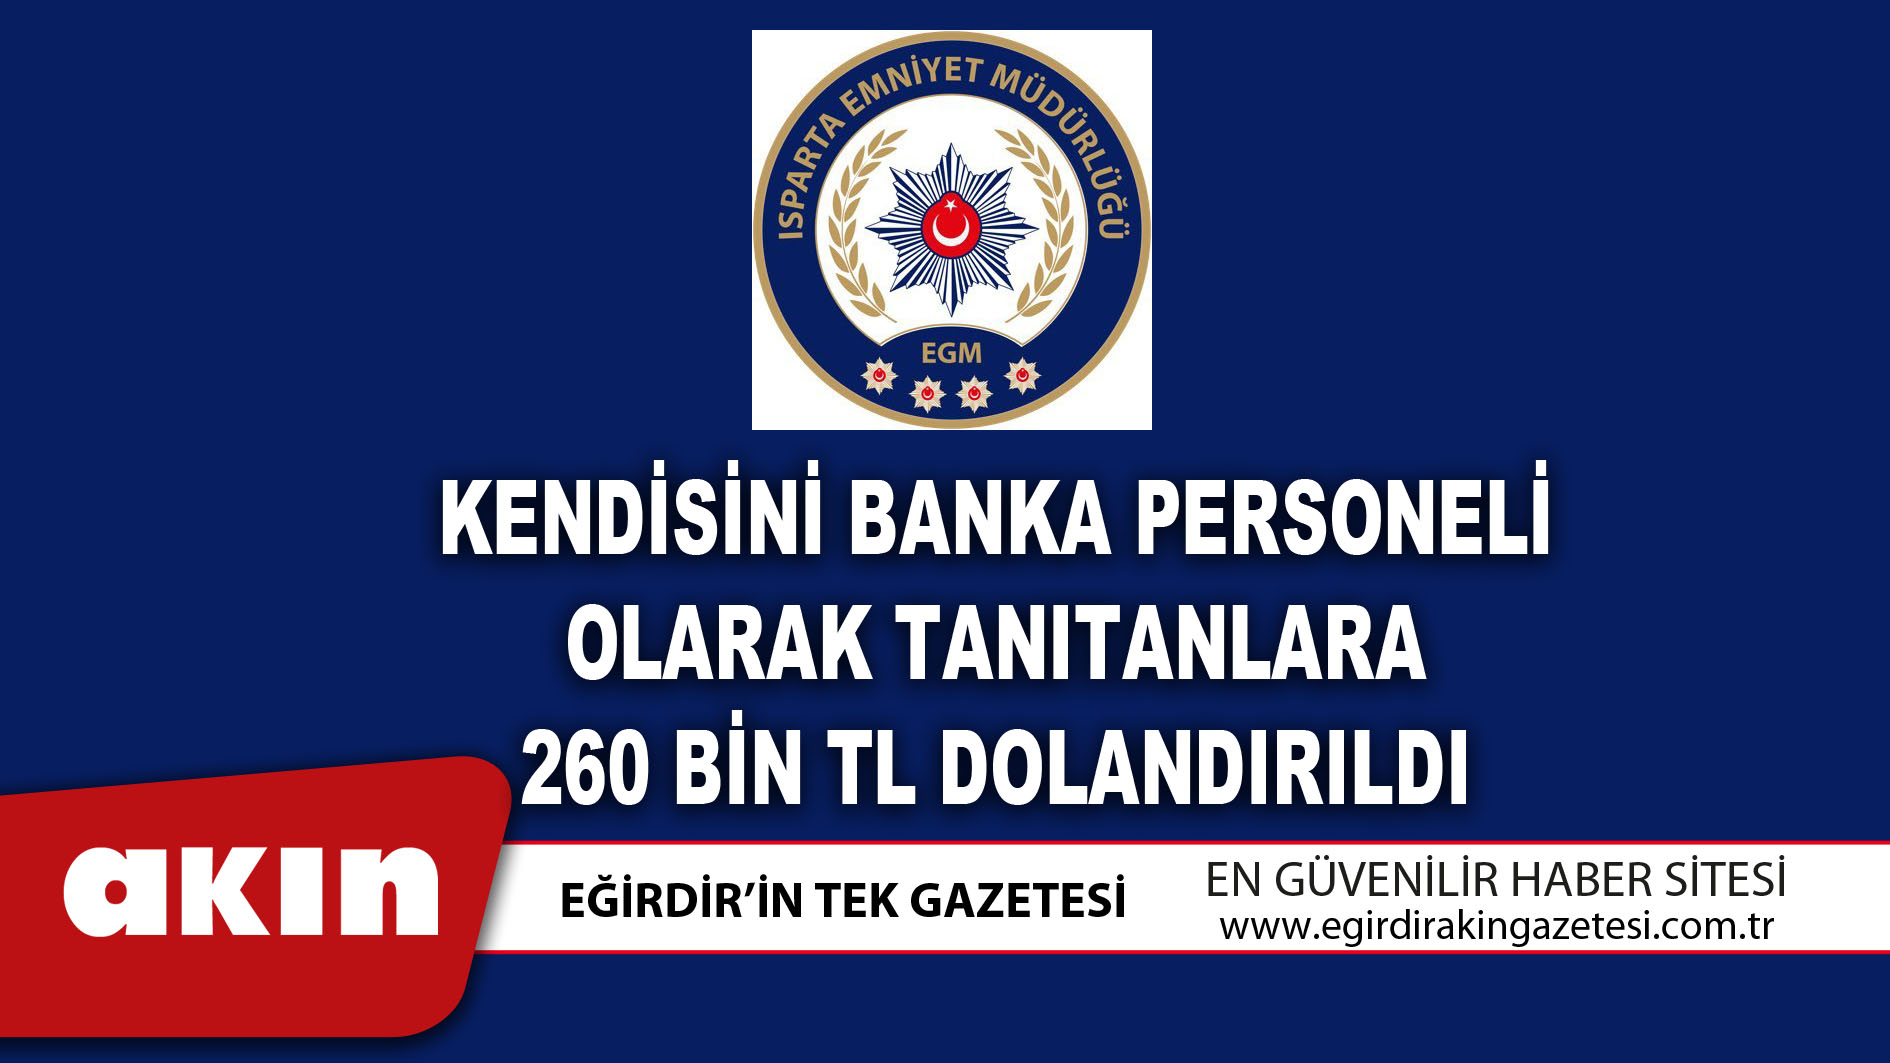 KENDİSİNİ BANKA PERSONELİ OLARAK TANITANLARA 260 BİN TL DOLANDIRILDI